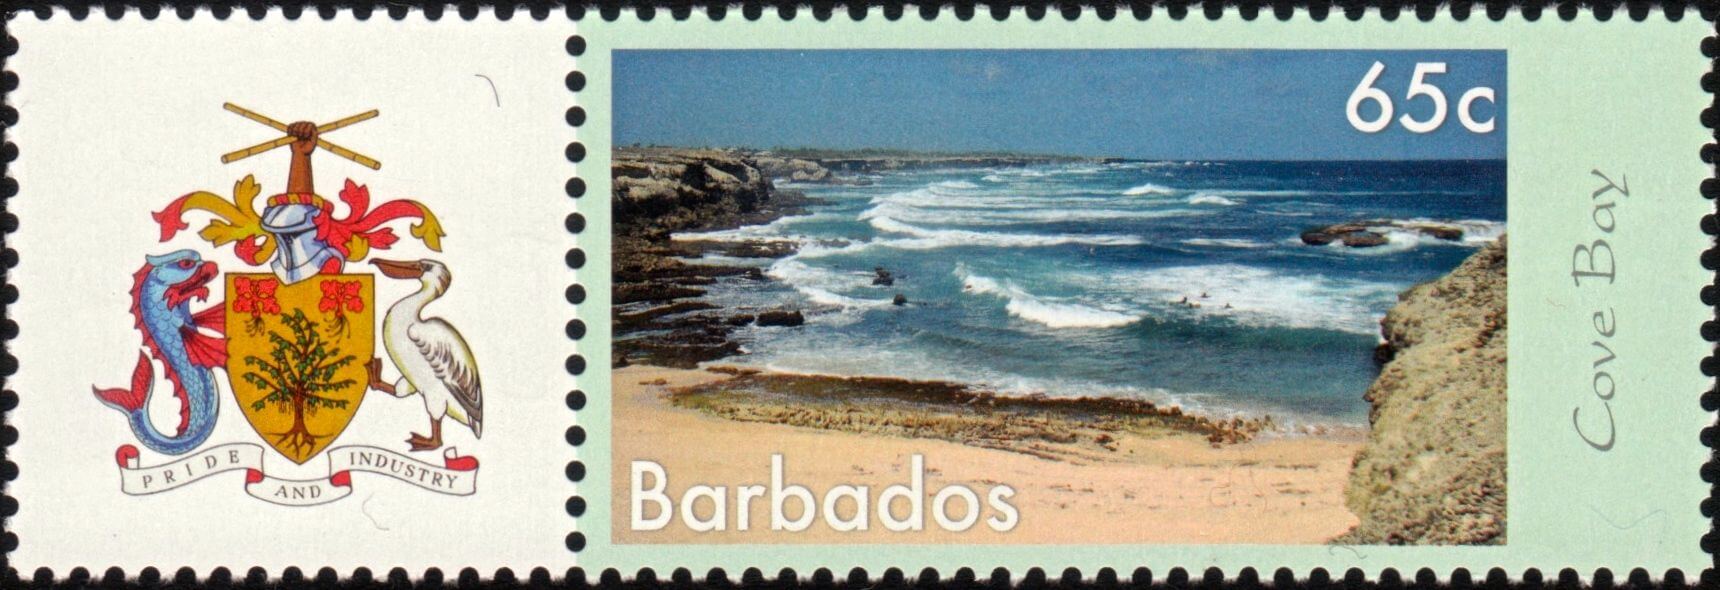 Дать гватемалу и два барбадоса. Барбадос марка Почтовая. Марка Гватемала и Барбадоса. Марки Гватемалы и Барбадоса почтовые.